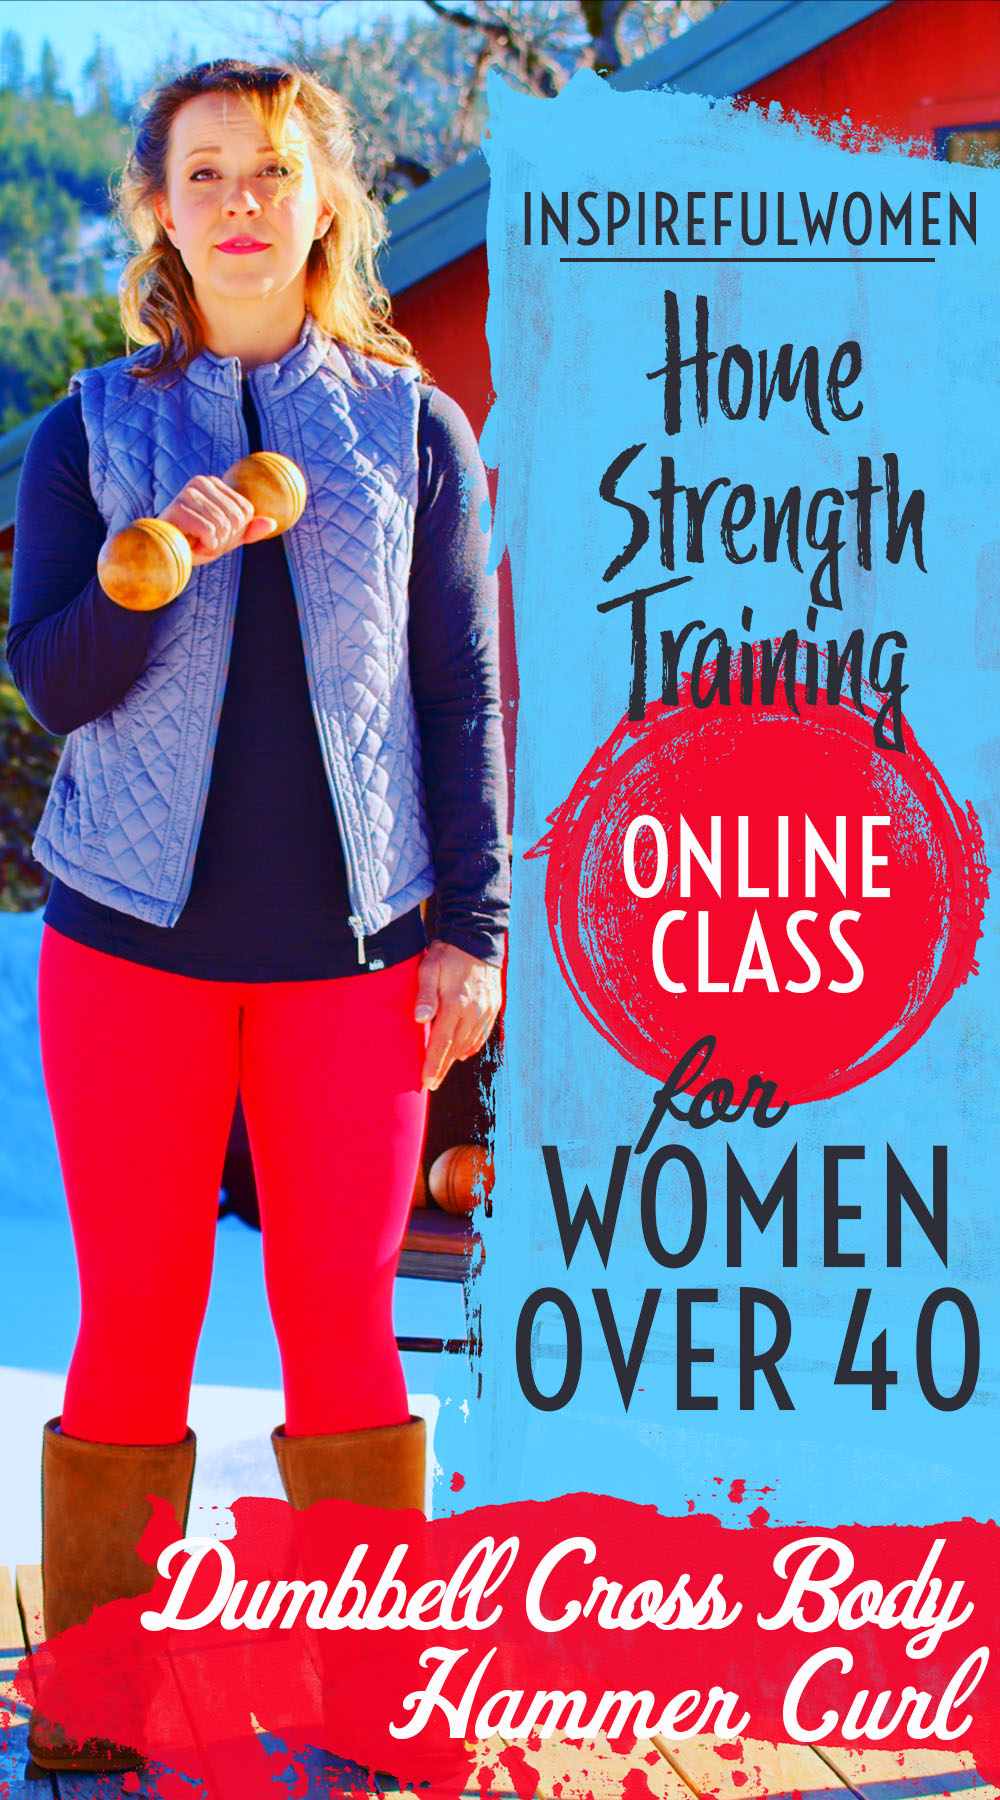 dumbbell-cross-body-bicep-curl-online-class-strength-training-women-over-40